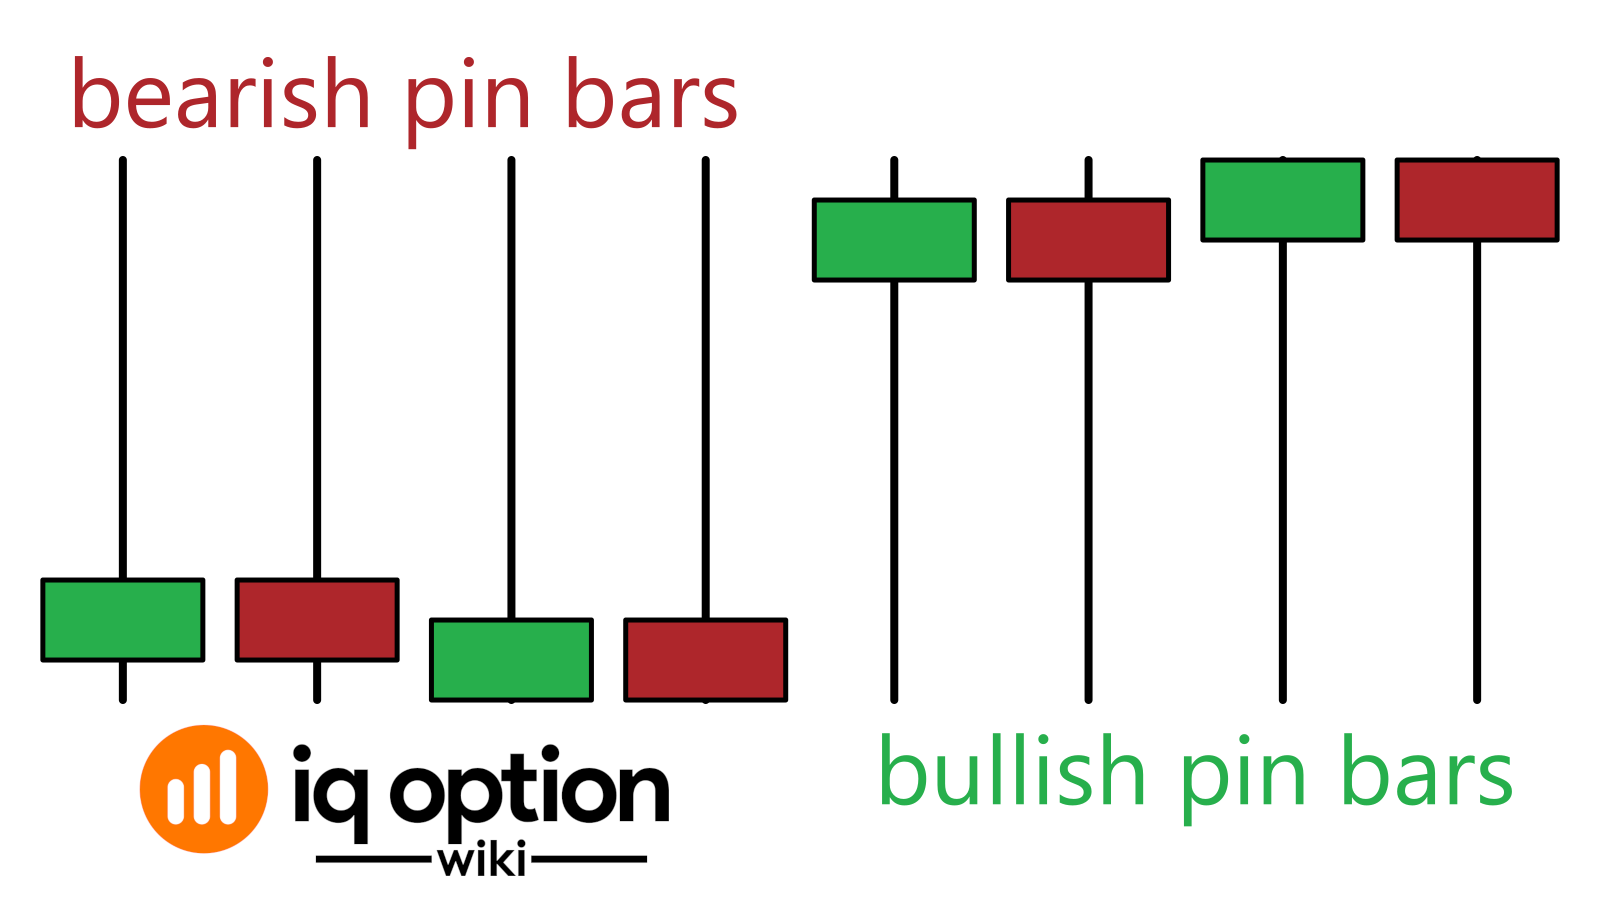 Bullish and bearish pin bar